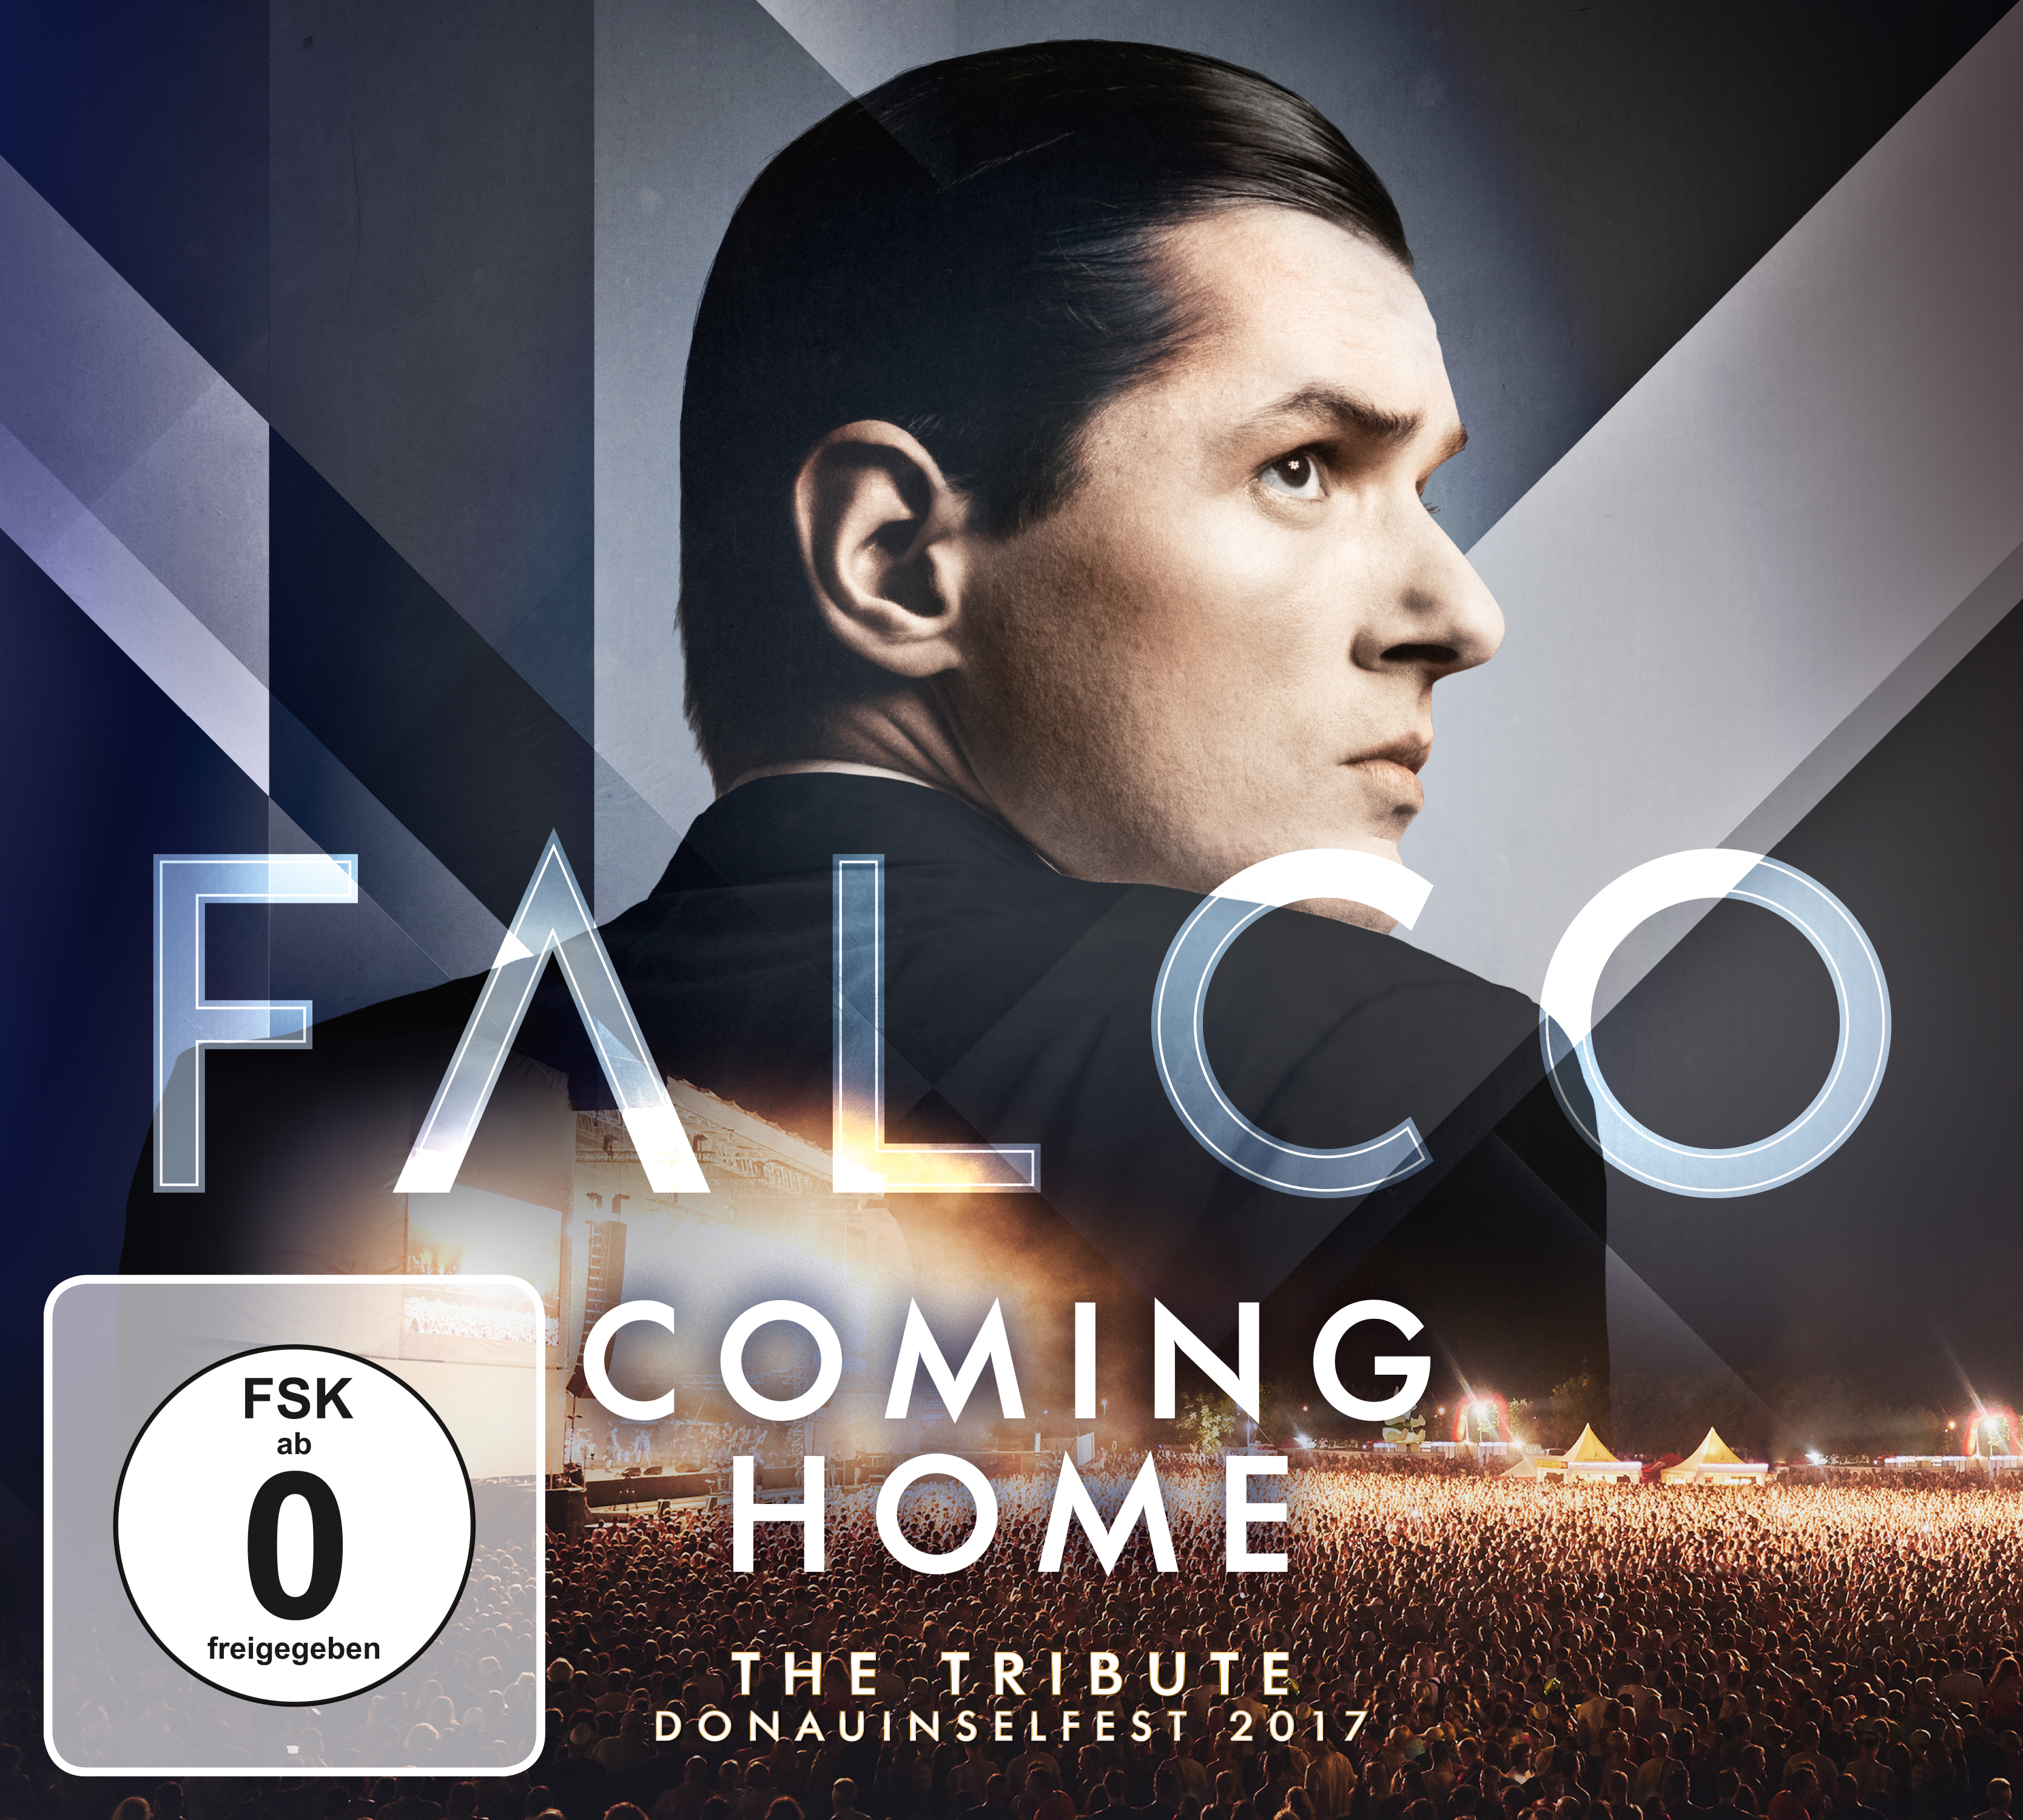 2017 Tribute Home-The Donauinselfest (CD) - FALCO Coming Falco -